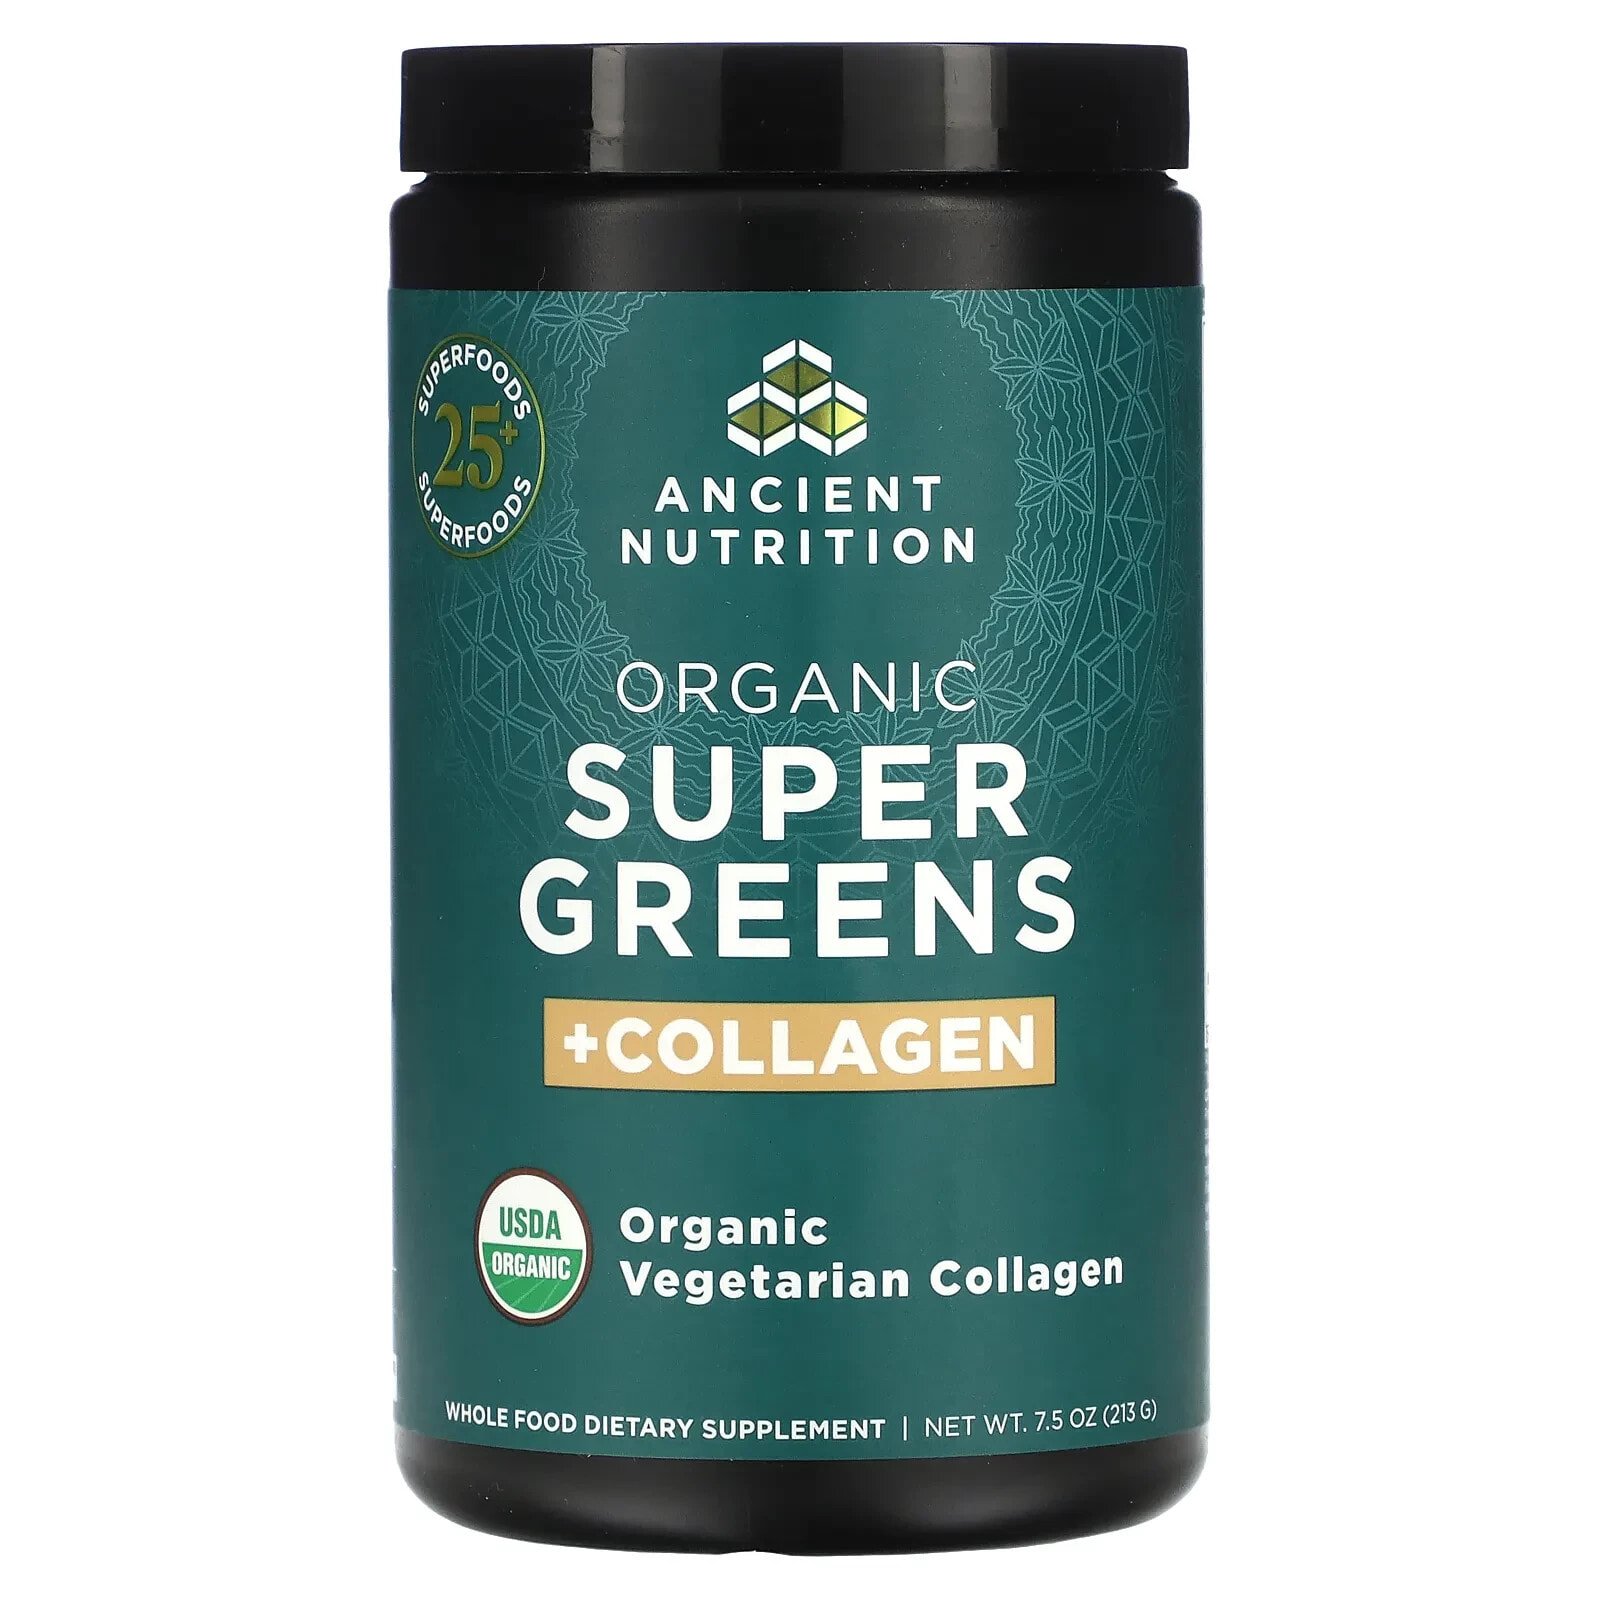 Dr. Axe / Ancient Nutrition, Organic Super Greens + Collagen, 7.5 oz (213 g)